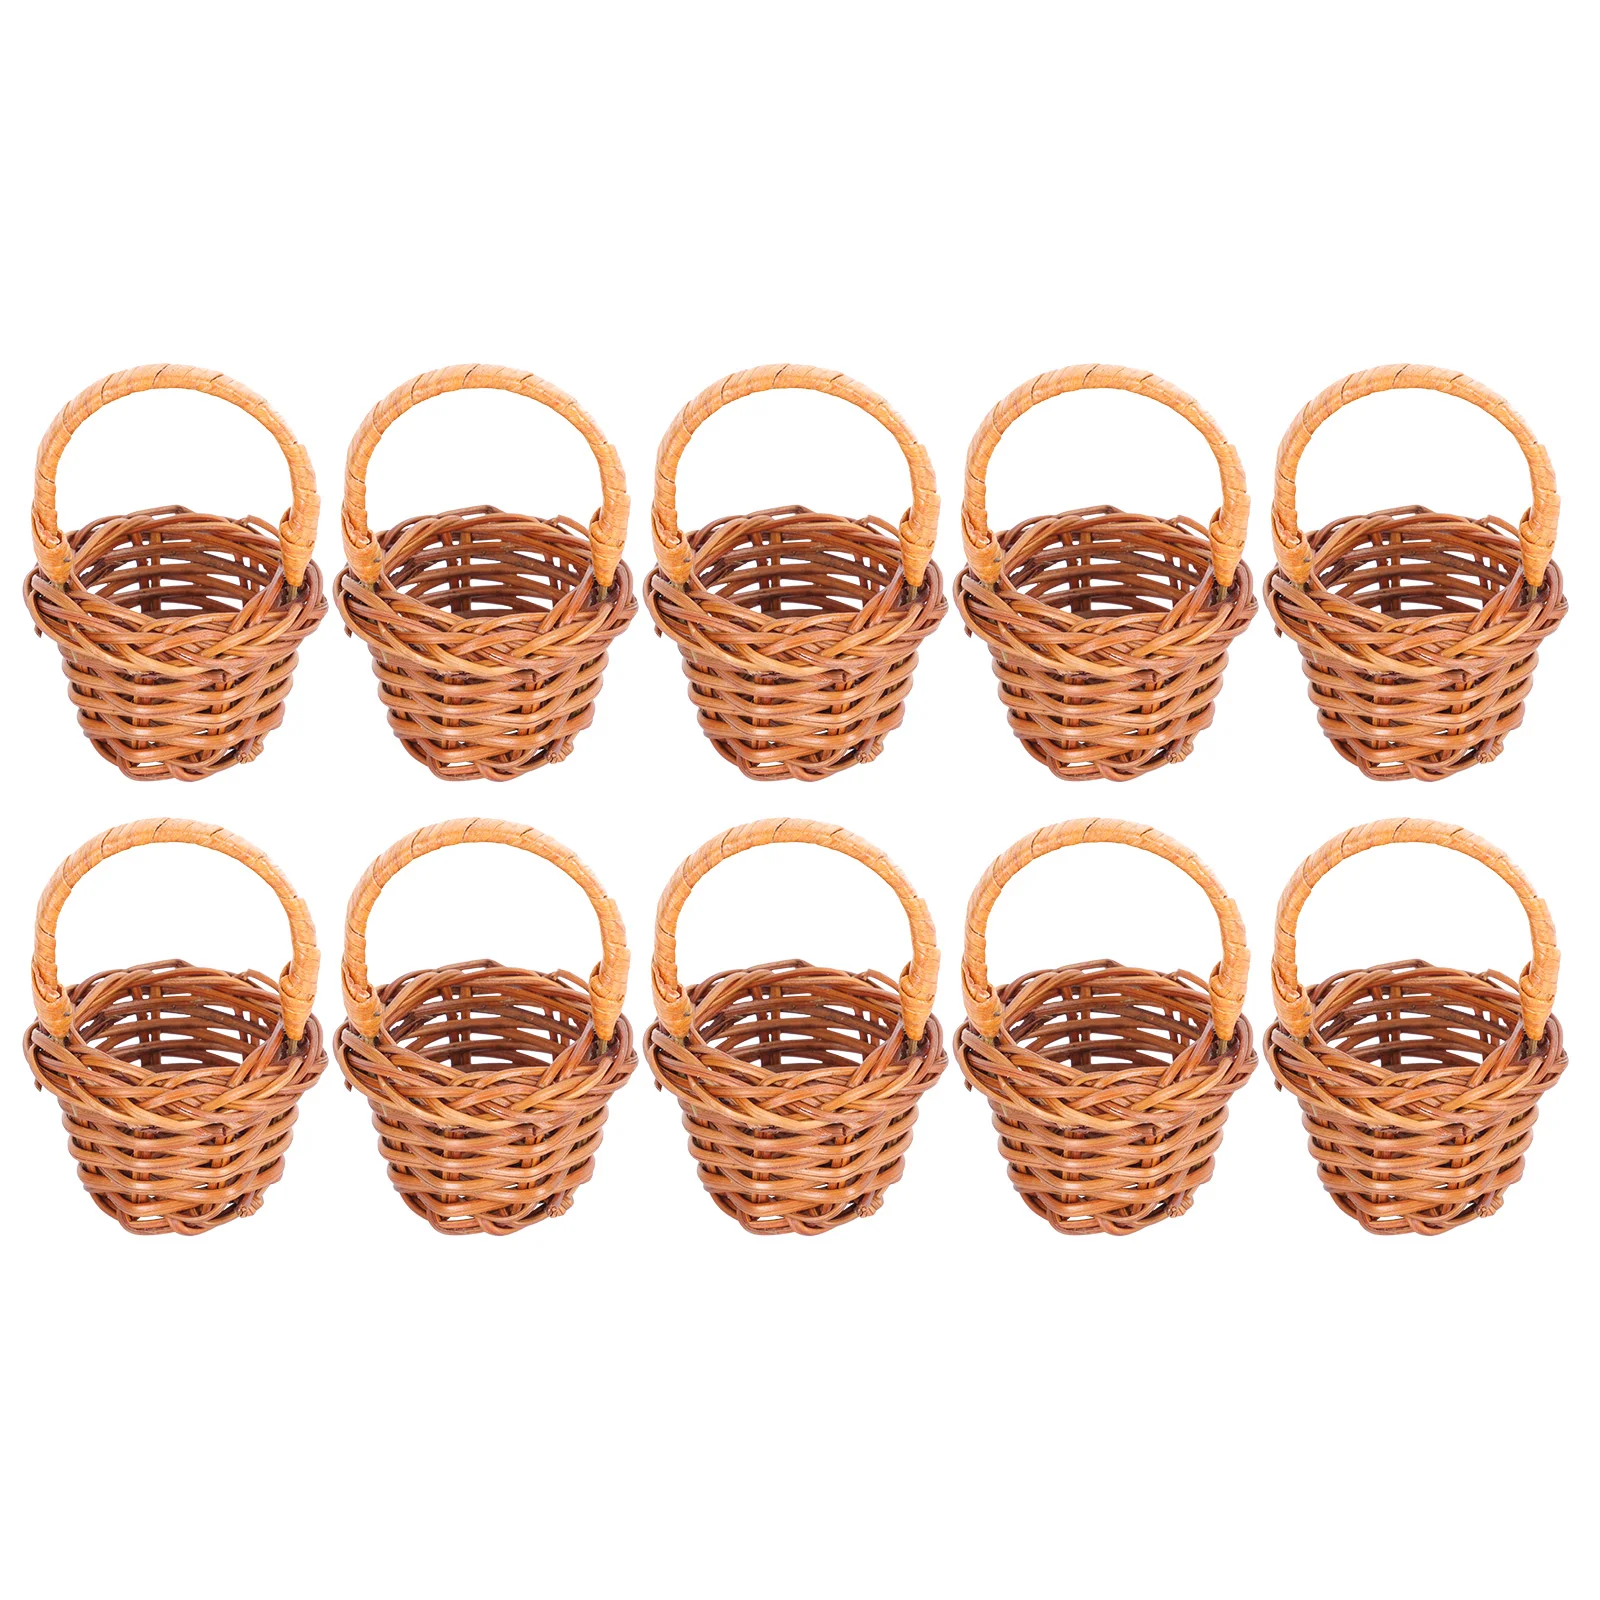 

Basket Baskets Mini Wicker Woven Picnic Rattan Flowerminiature Small Fruitparty Wedding Willow Storage Favor Candy Hamper Bread